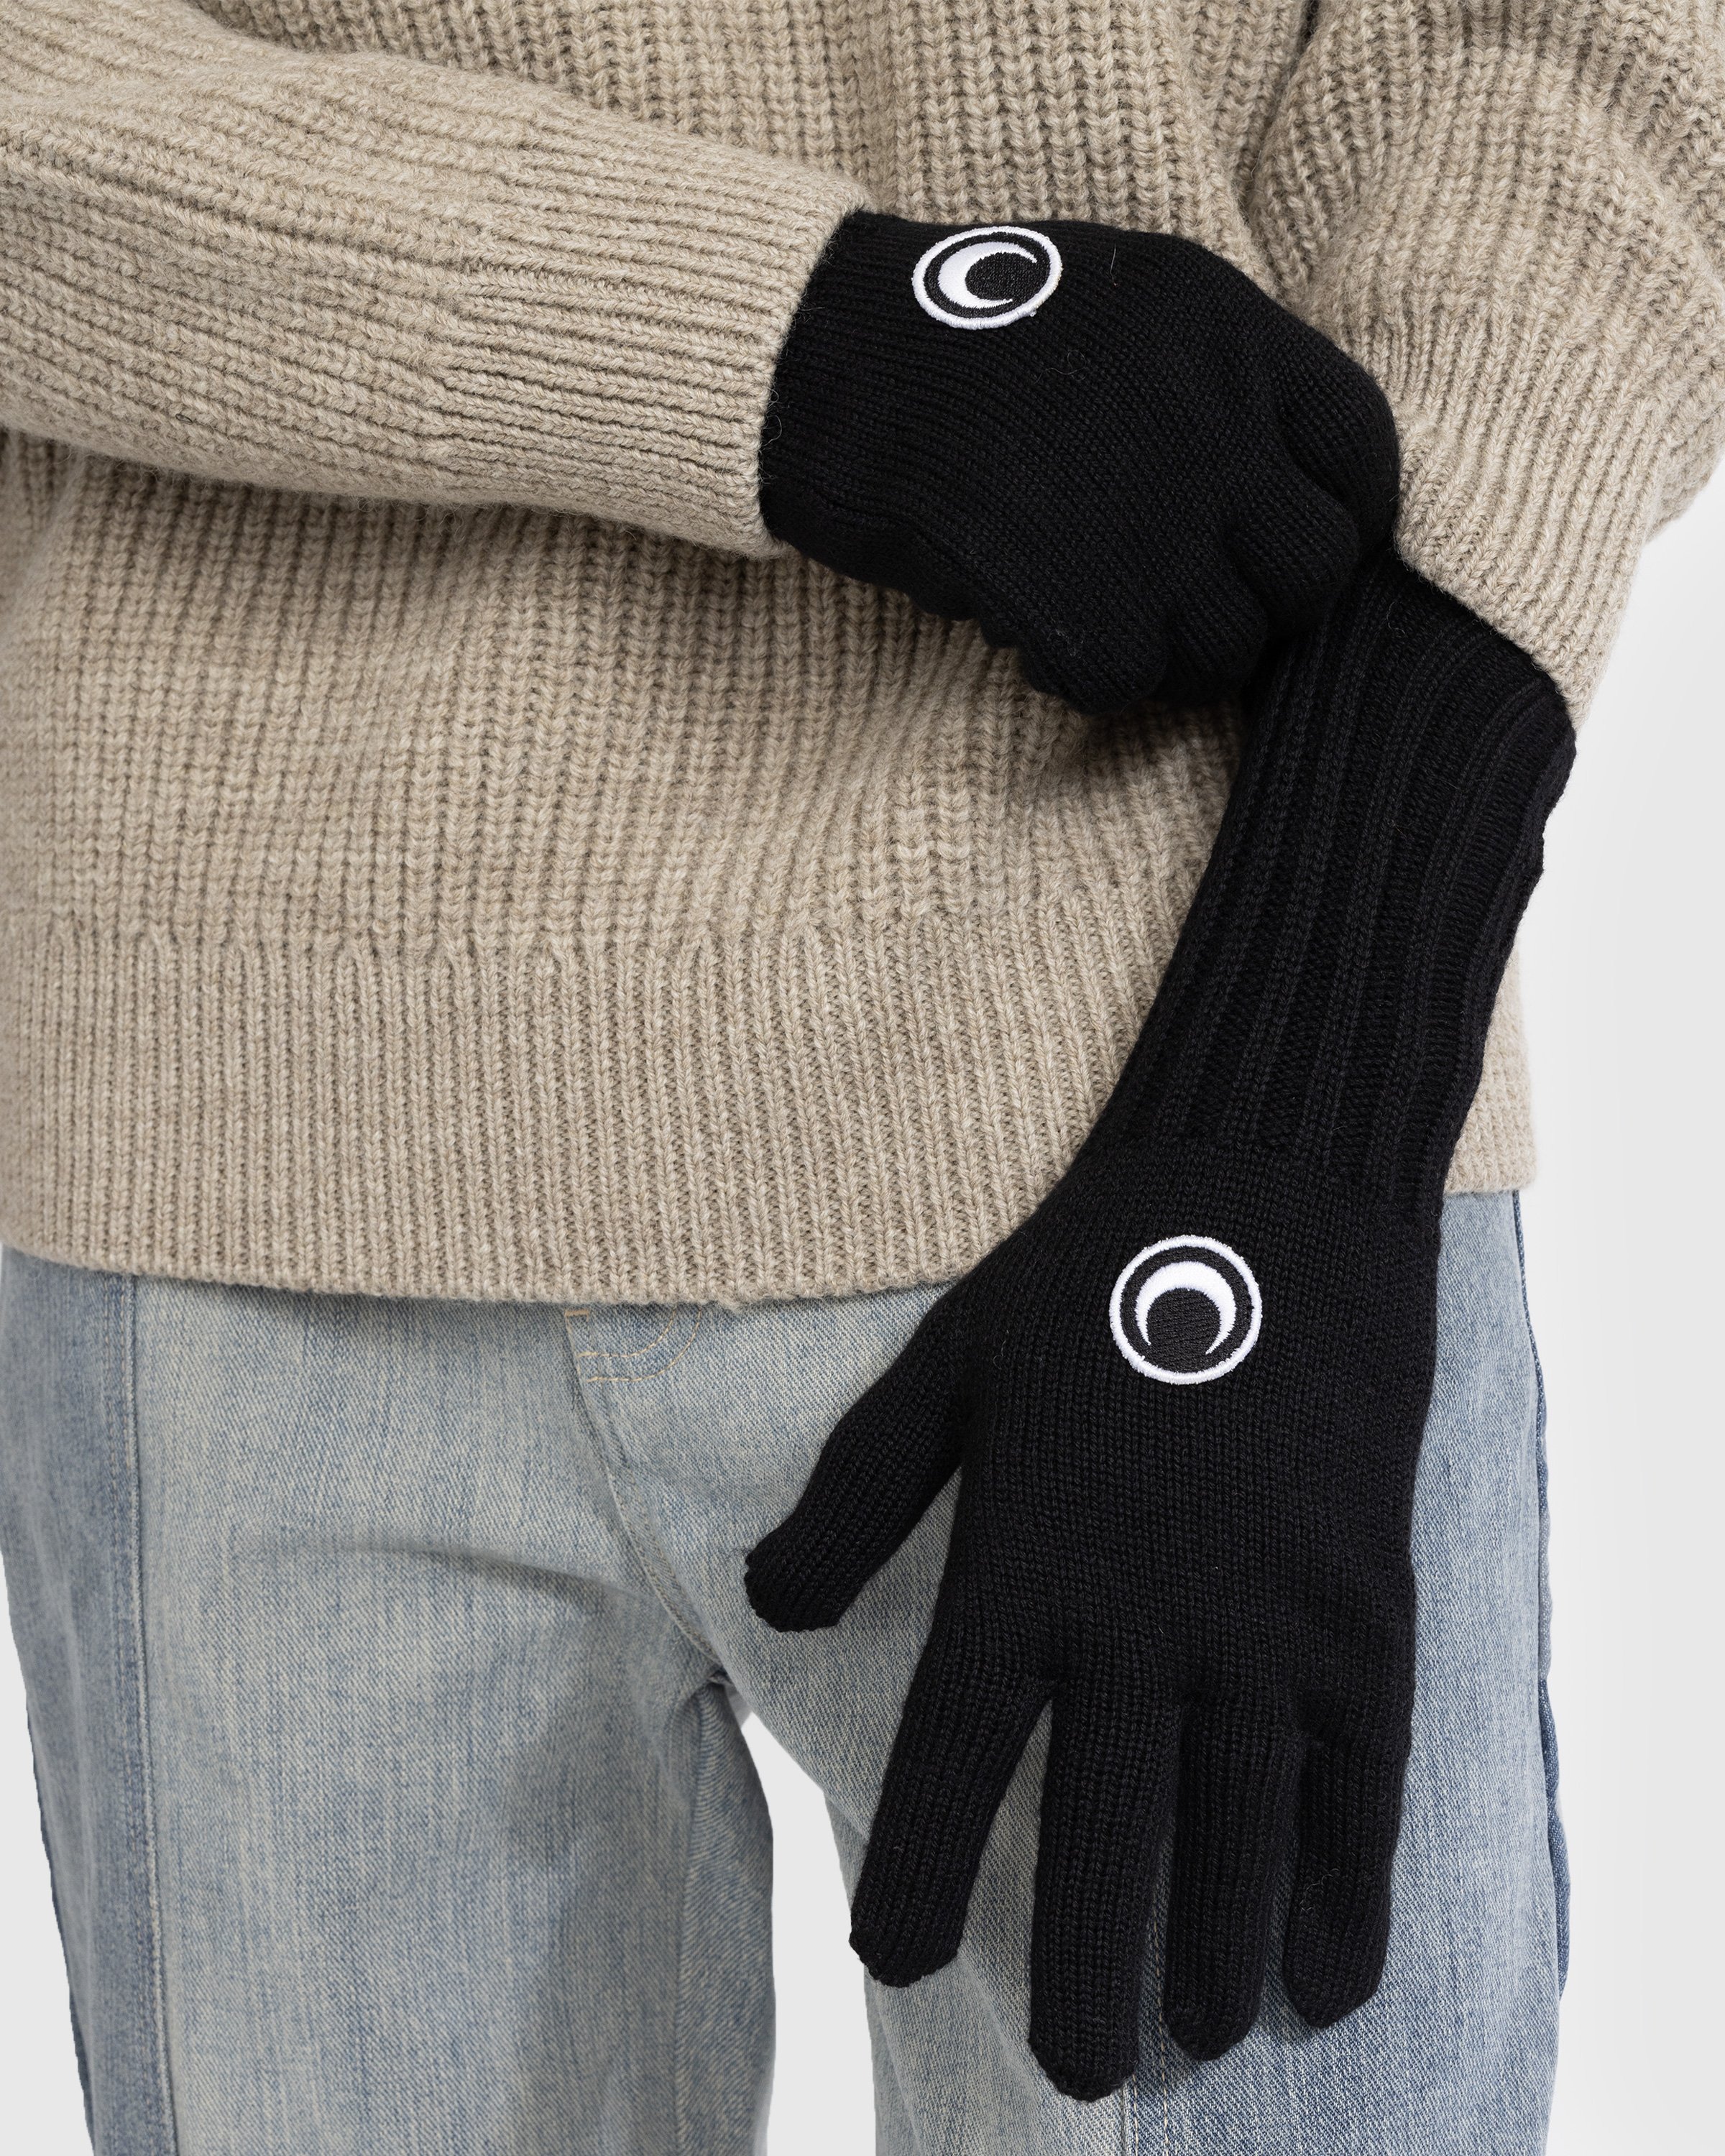 Marine Serre - Mulesing Free Wool Rib Wrist Length Gloves Black - Accessories - undefined - Image 4